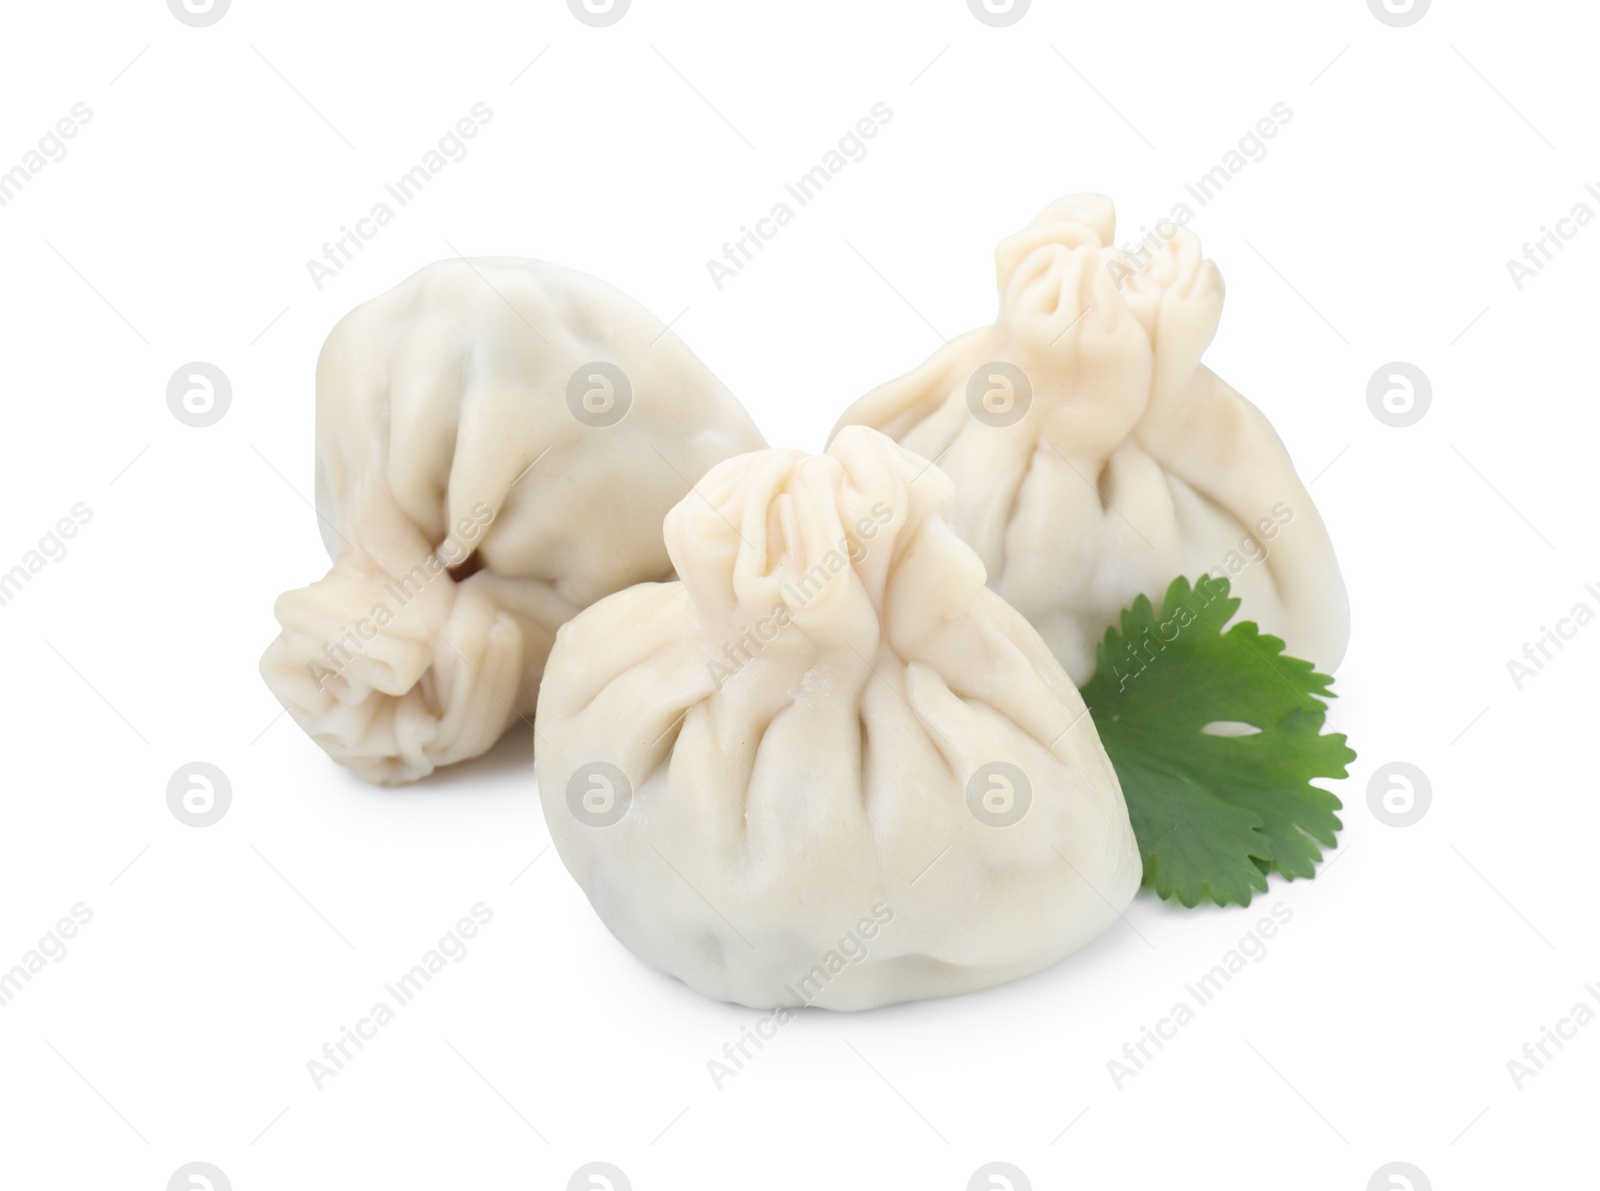 Photo of Three tasty khinkali (dumplings) and parsley isolated on white. Georgian cuisine